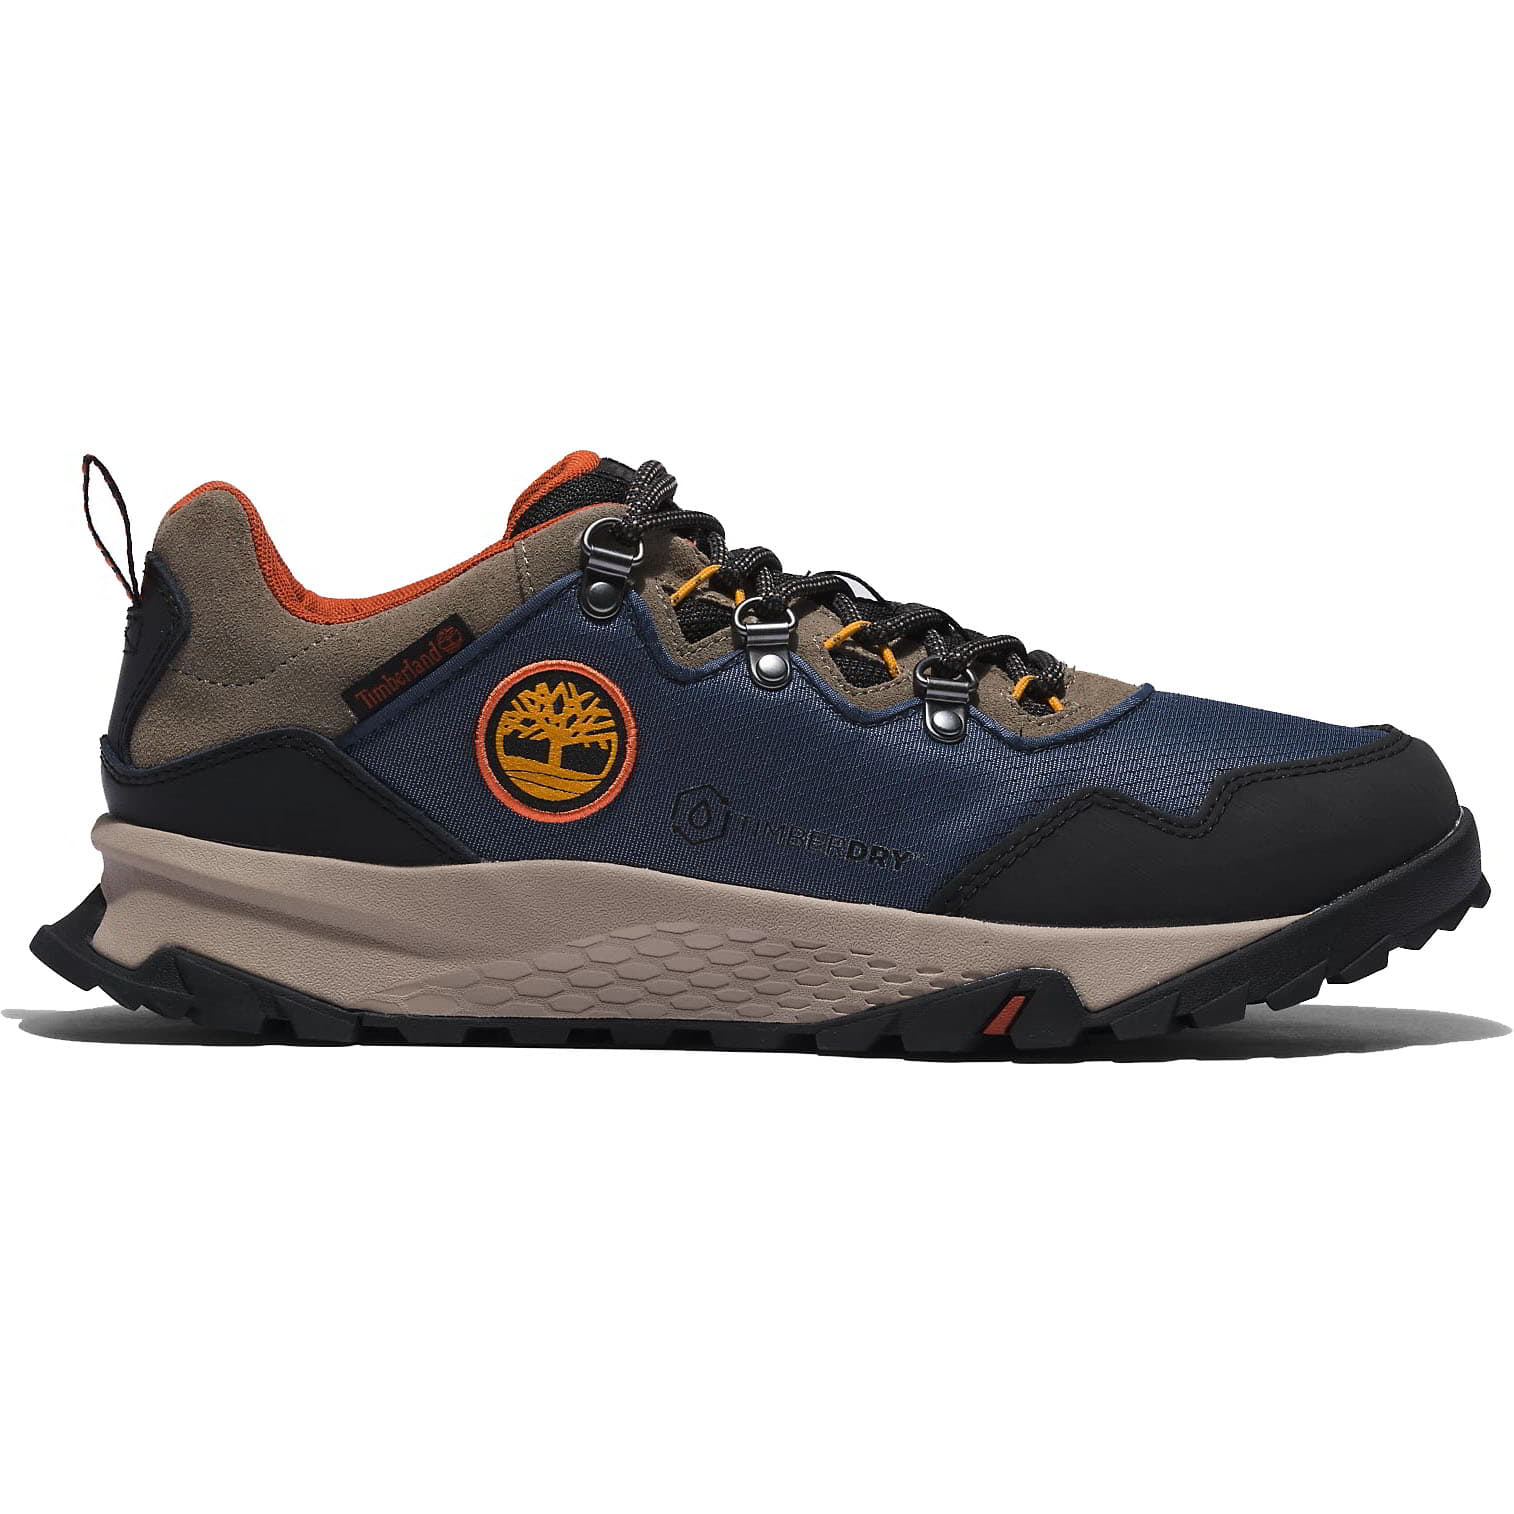 Timberland Mens A2DZZ Lincoln Peak Low Waterproof Walking Hiking Shoes - UK 9.5 Blue 2951